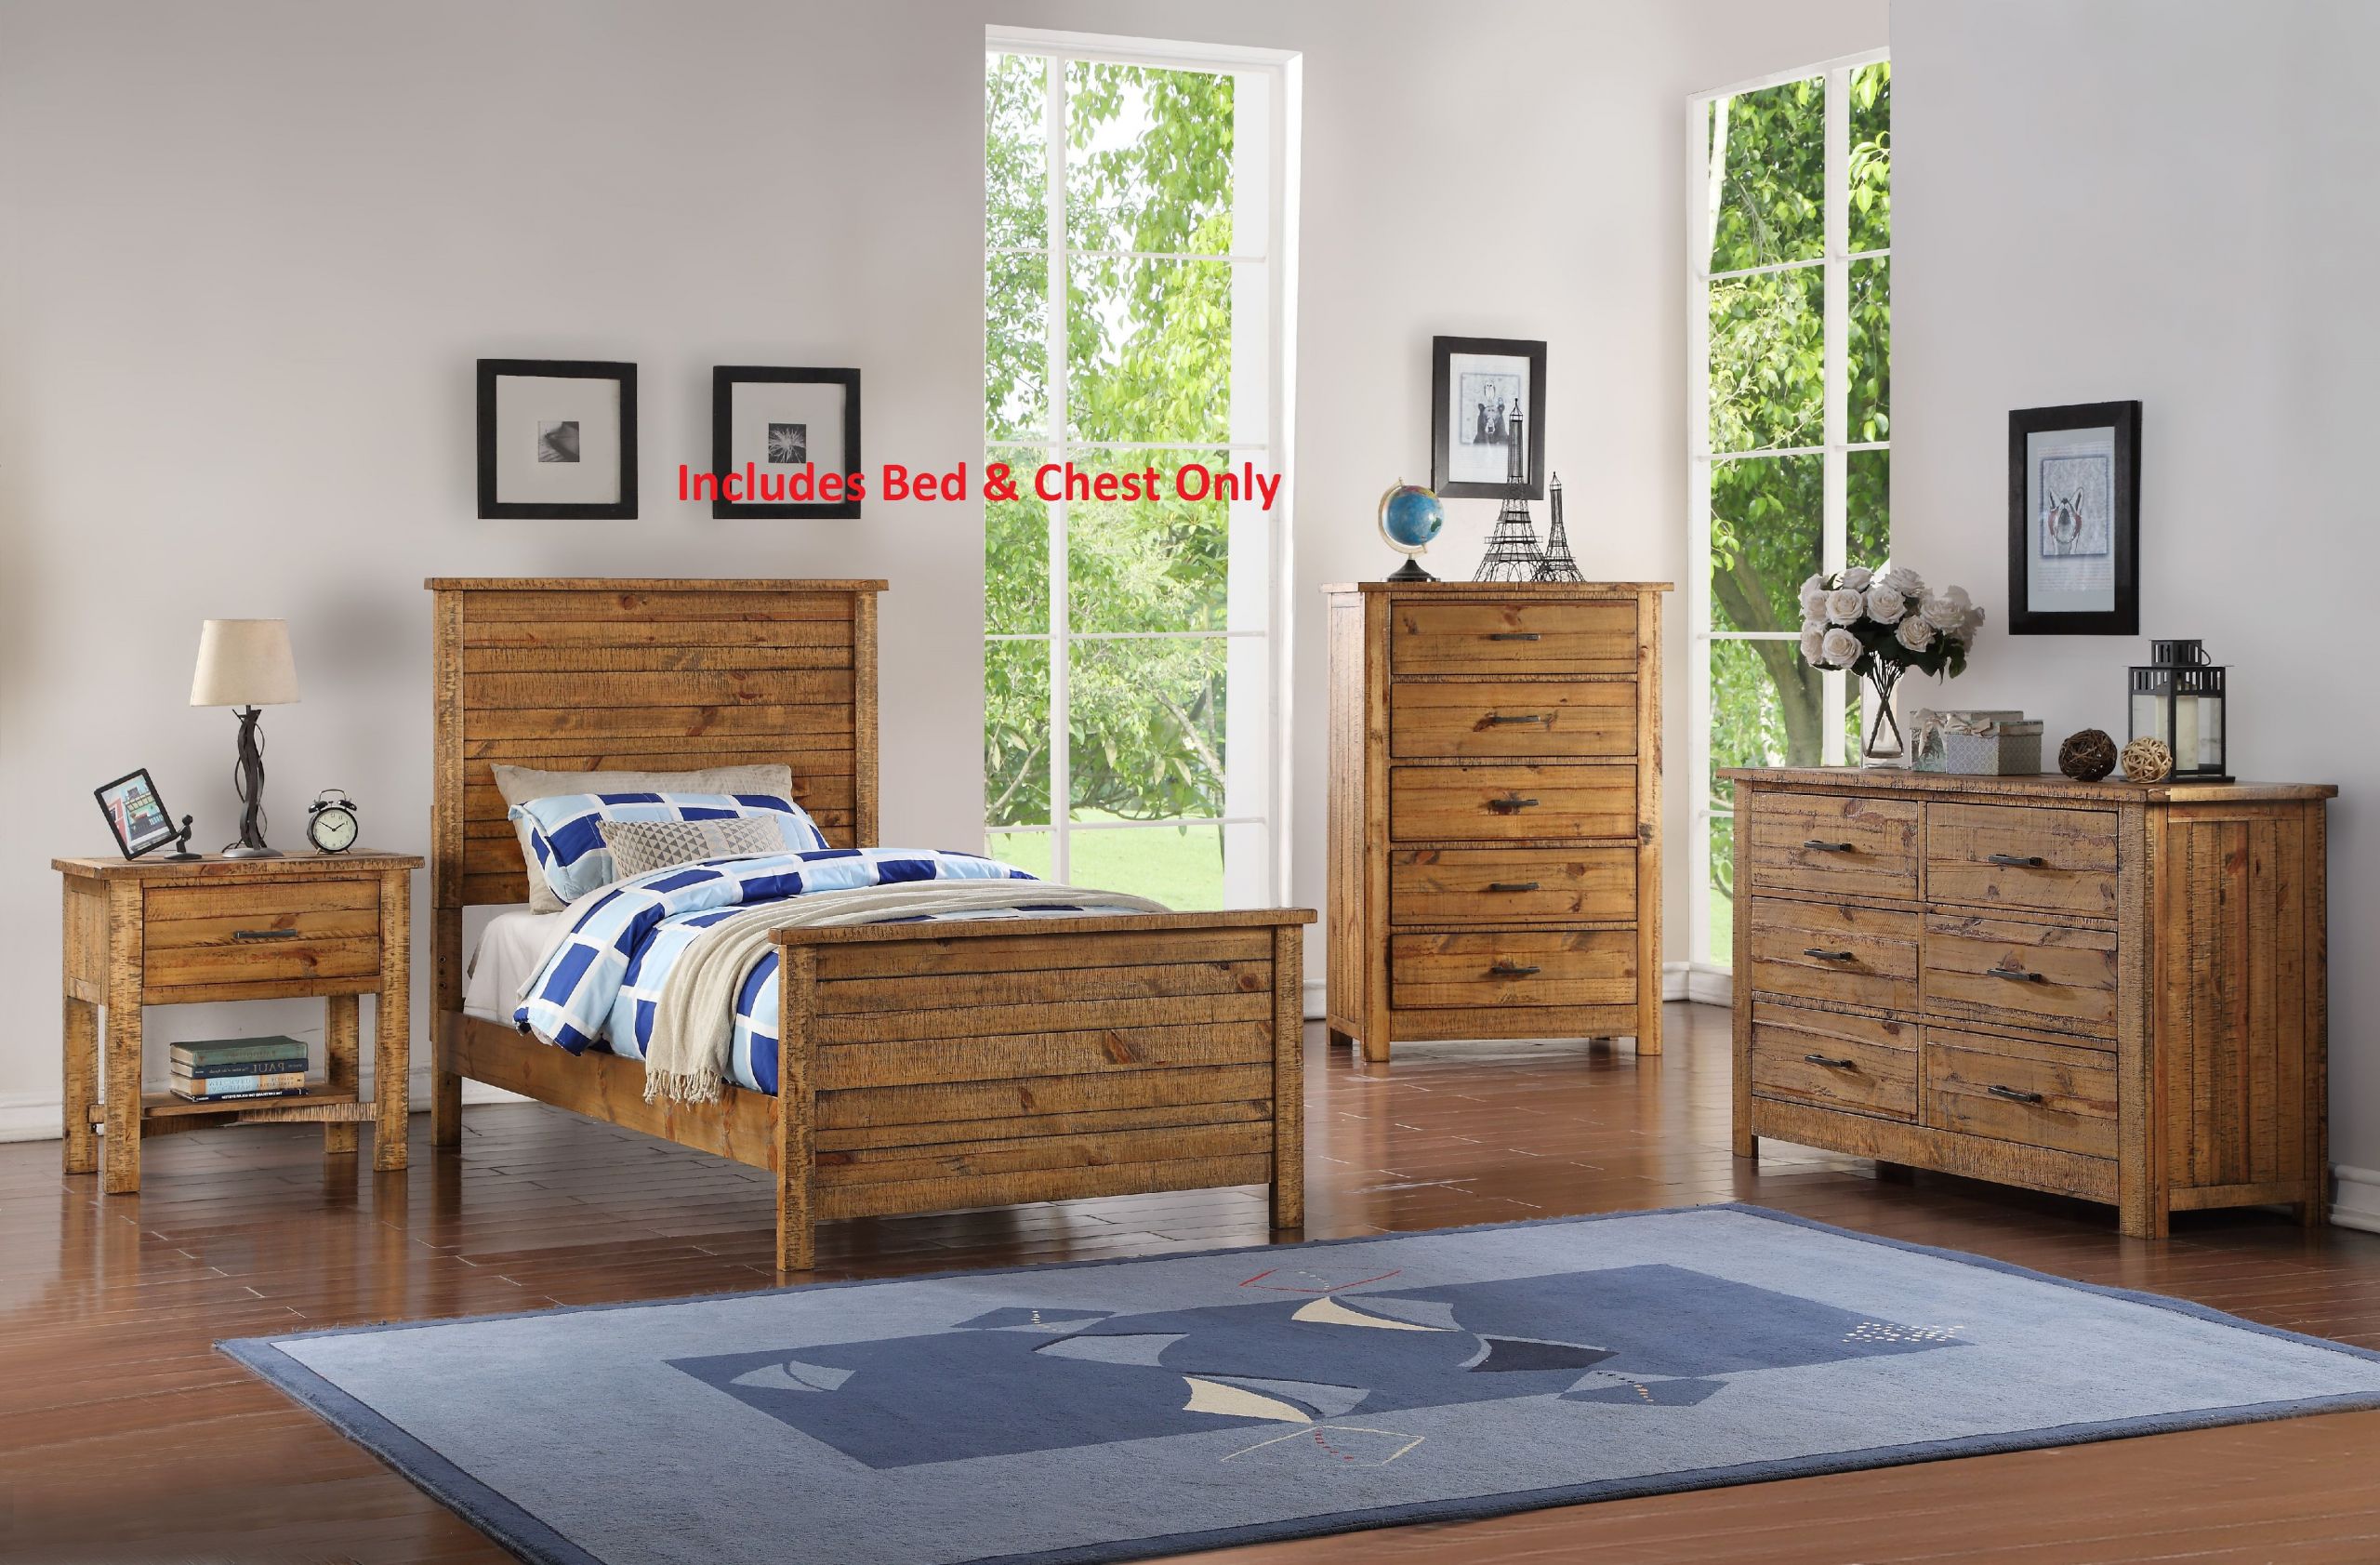 Walmart Kids Bedroom Furniture
 Madison 2 Piece Twin Size Natural Wood Rustic Kids Bedroom